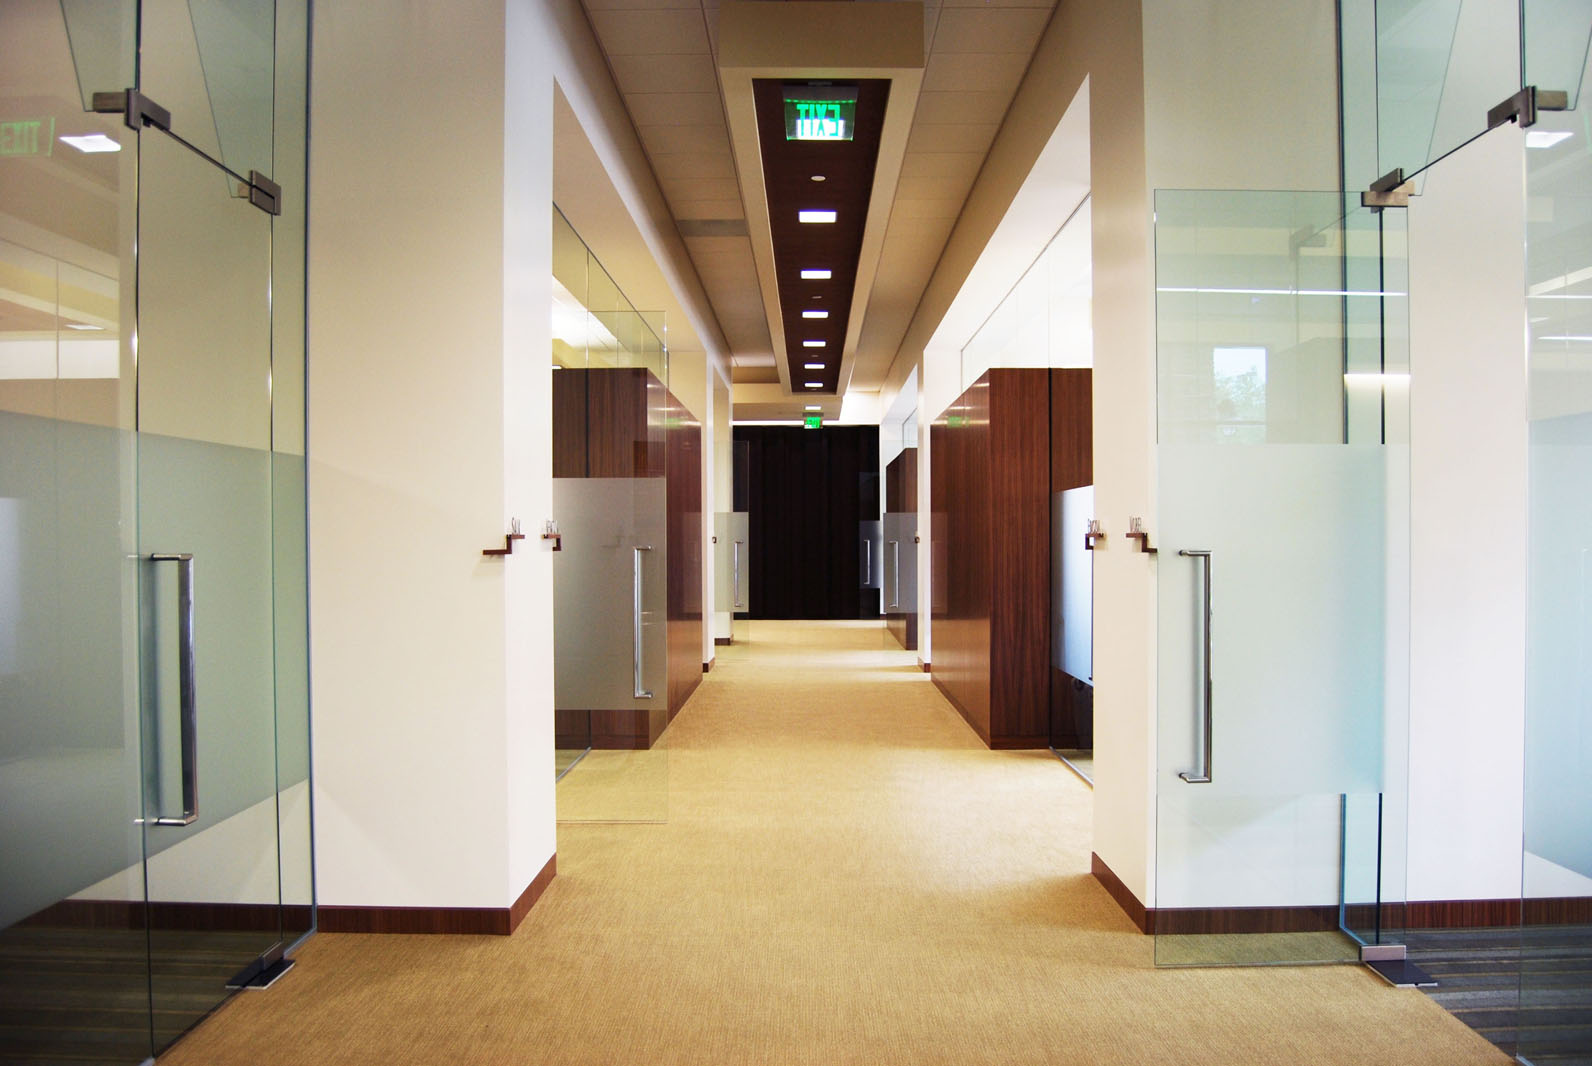 Knobbe Martens hallway1